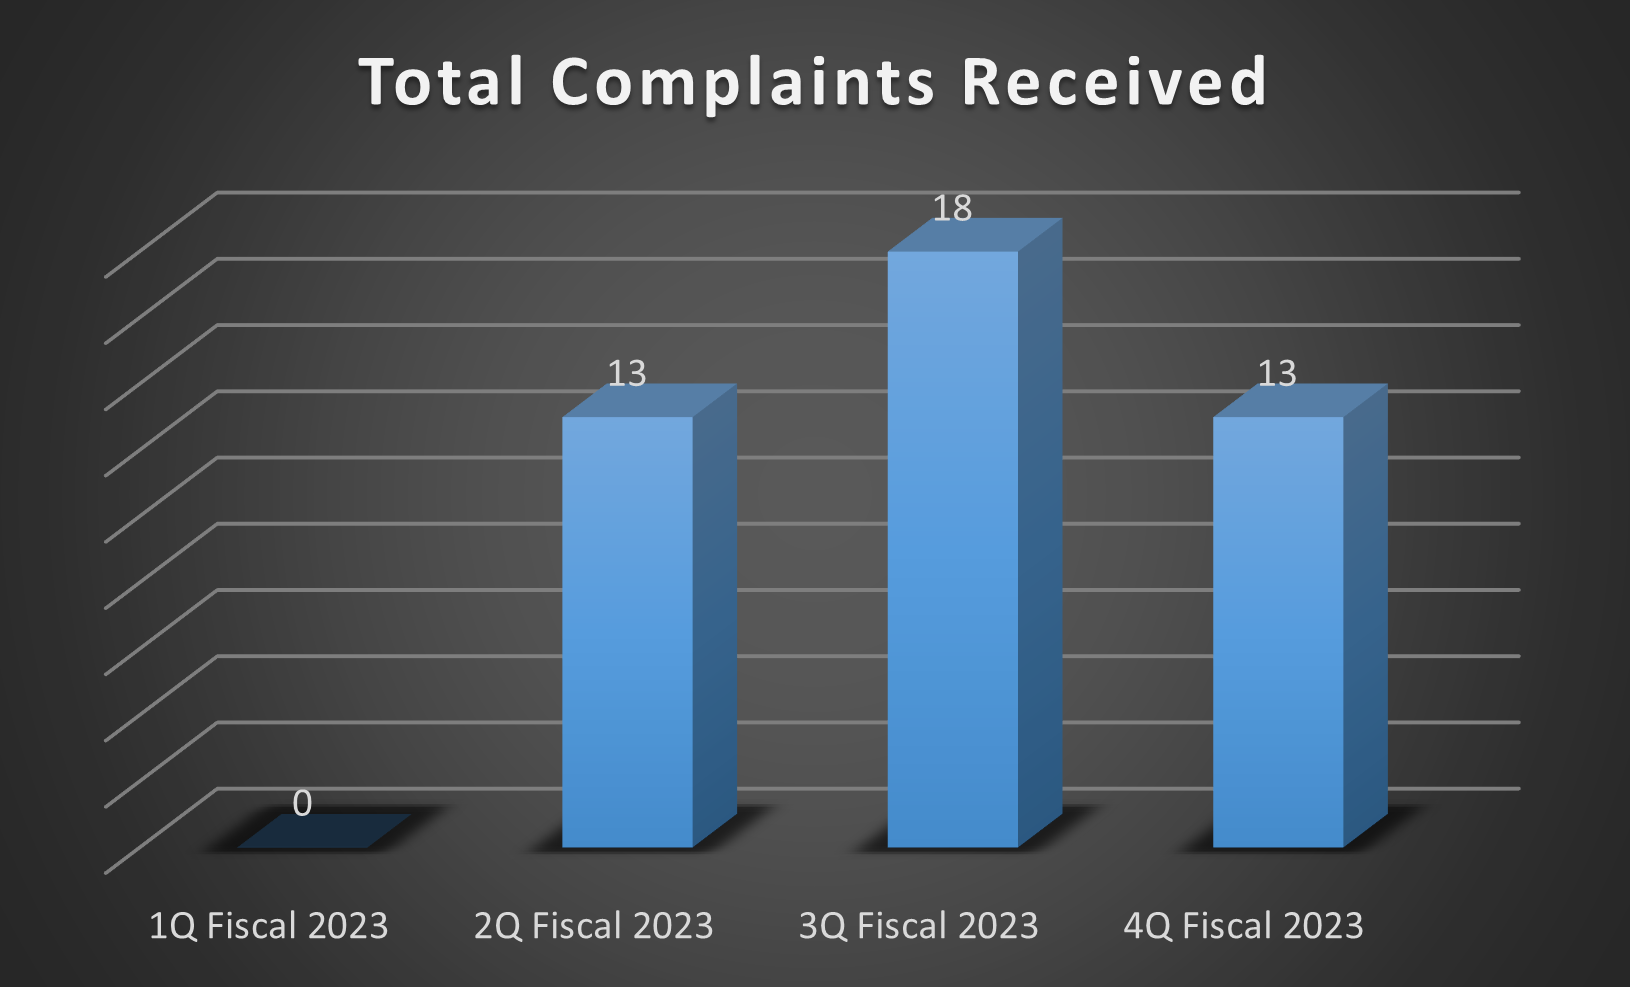 Q4 2023 Total Complaints Received